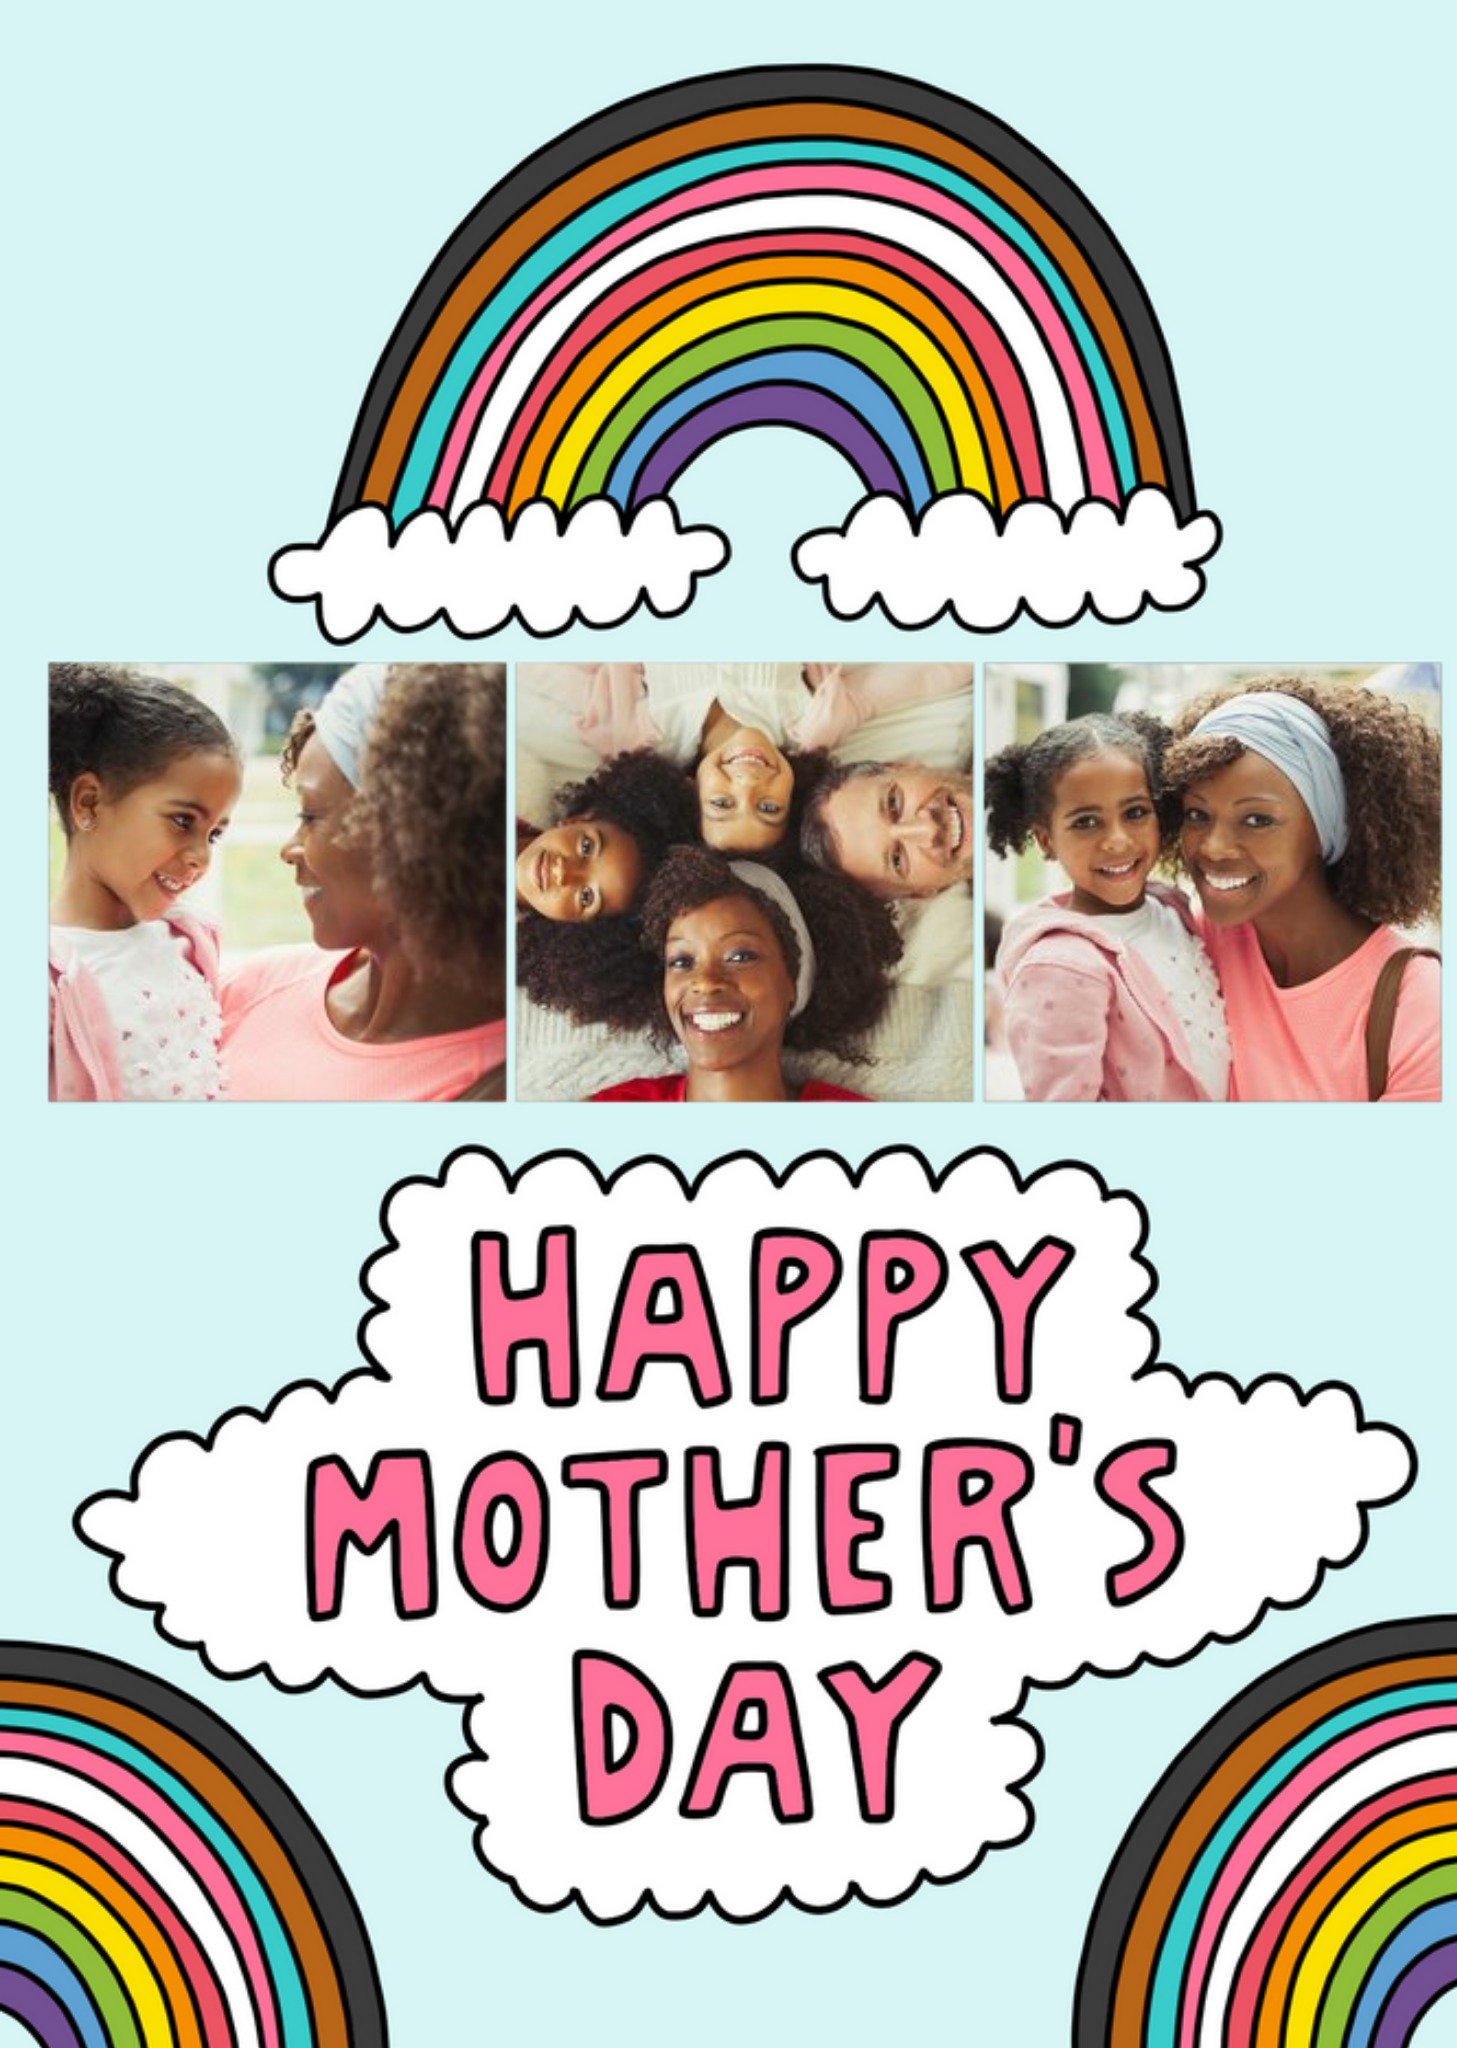 Moonpig Angela Chick Illustrated Rainbow Mother's Day Photo Upload Card Ecard